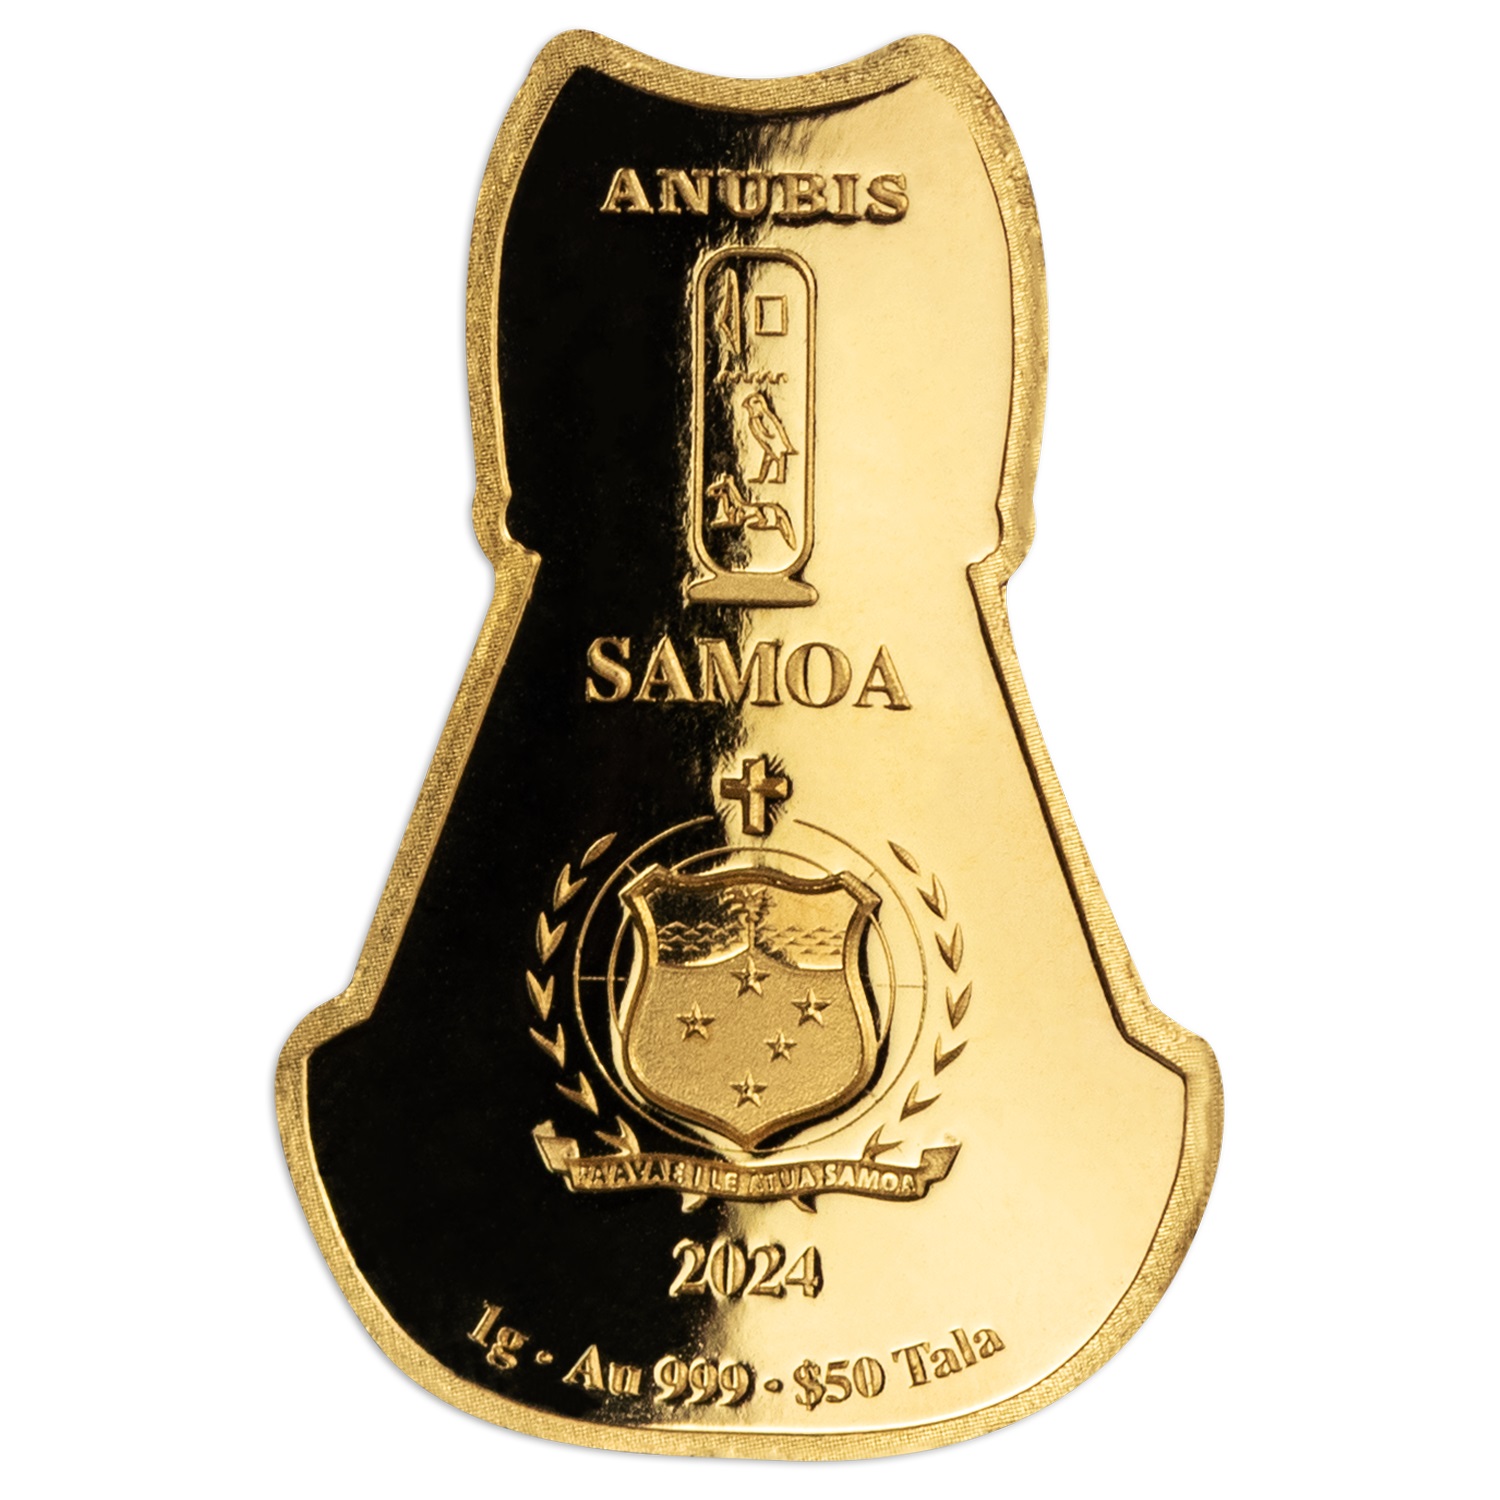 (W193.1.50.Tala.2024.1.g.Au.1559470117) 50 Tala Samoa 2024 1 gram Proof gold - Anubis Obverse (zoom)